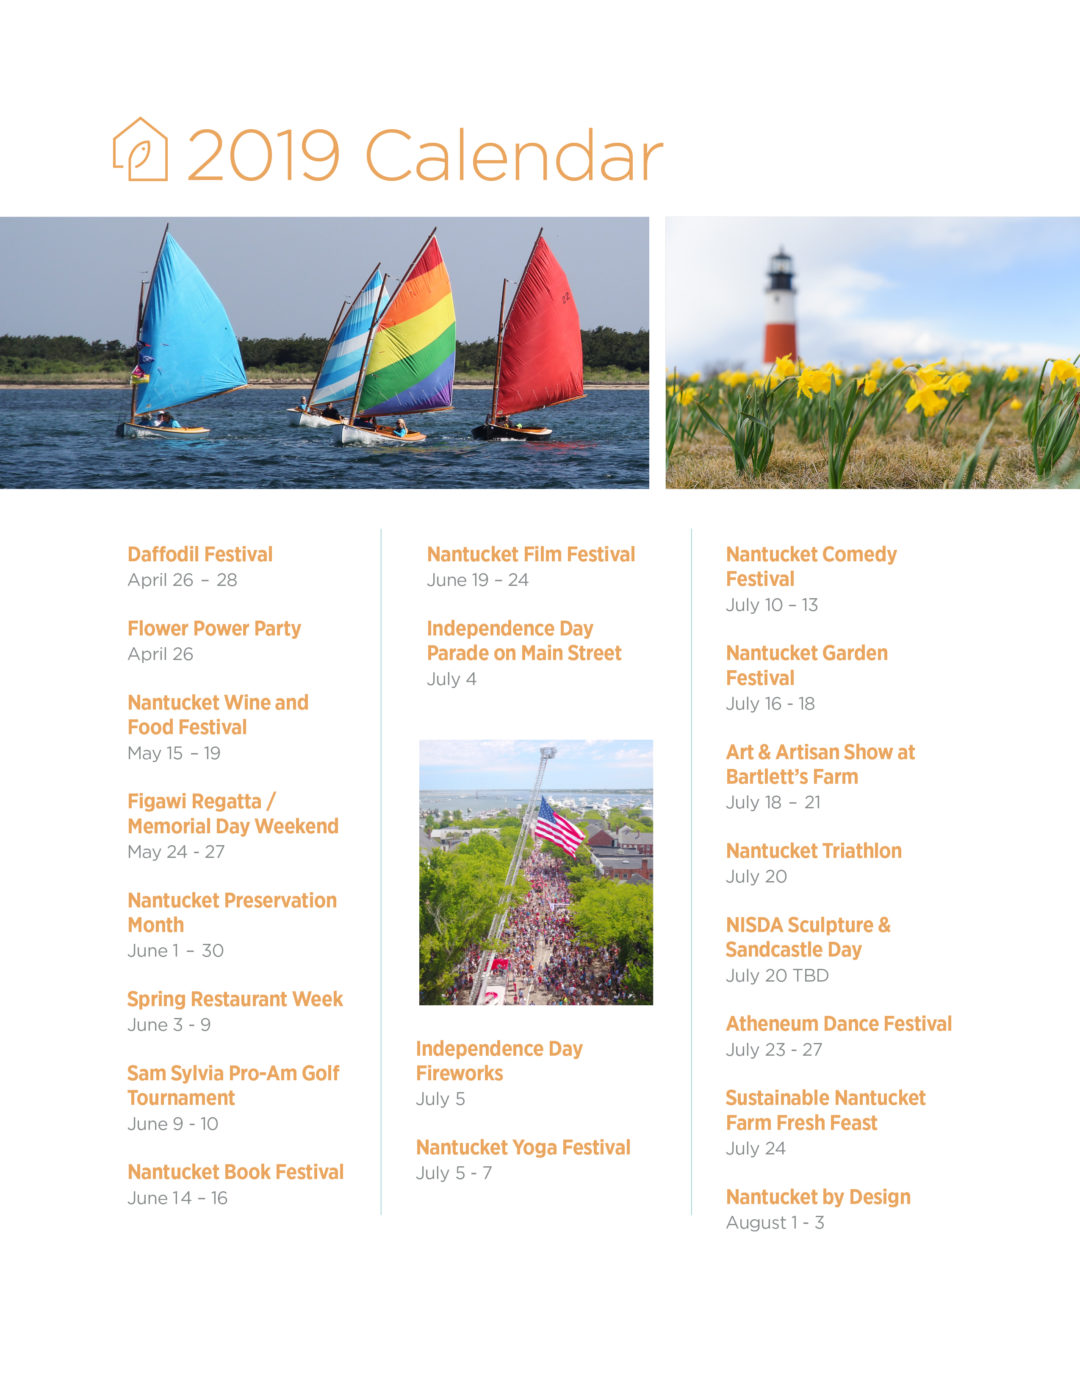 2019 Nantucket Calendar of Events Fisher Real Estate Nantucket